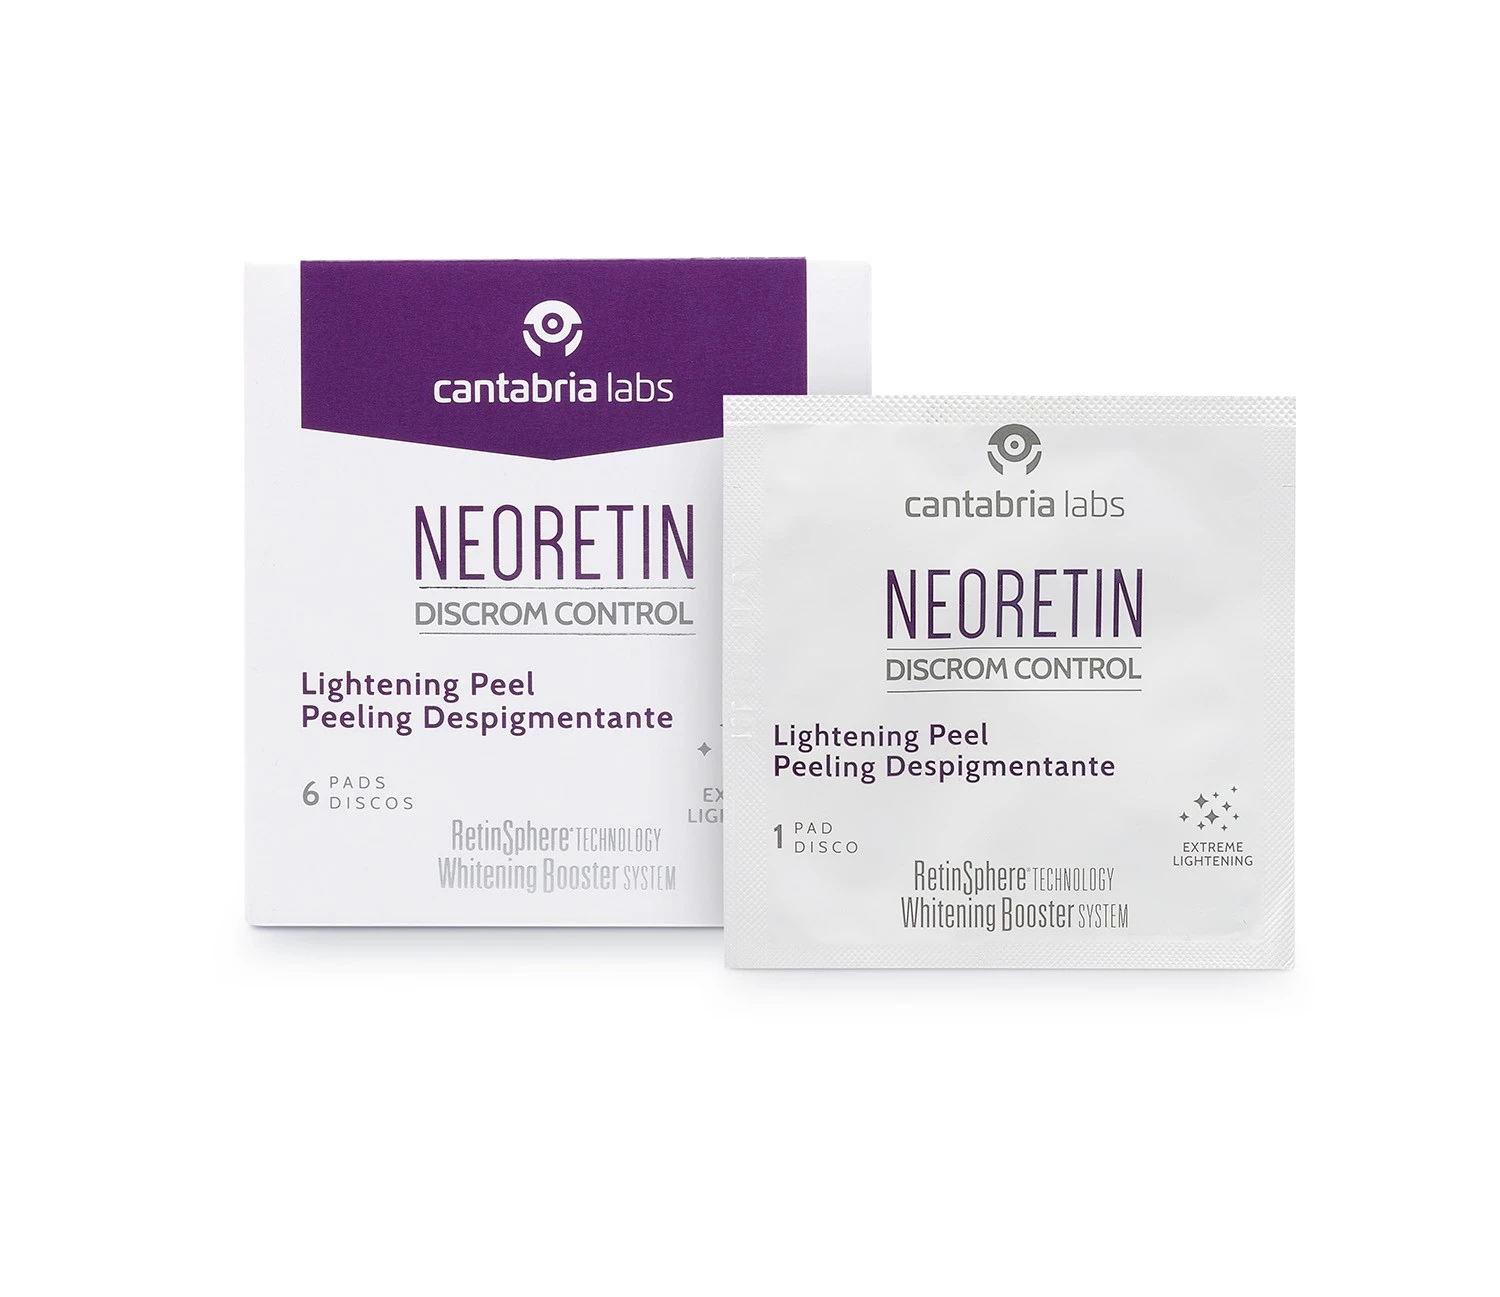 Neoretin® Discrom Control Peeling Despigmentante, 6 discos.